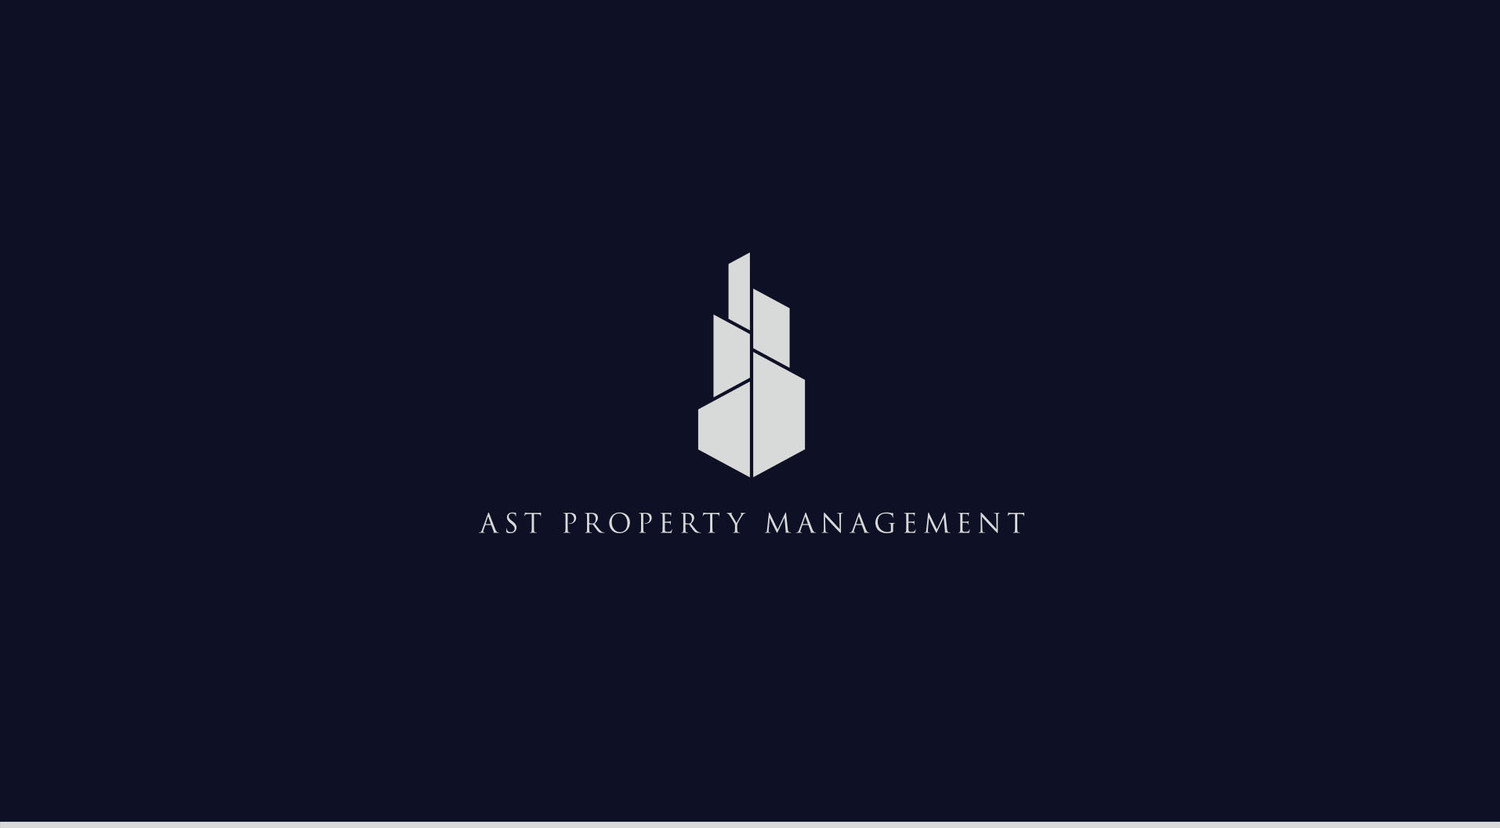 Ast property management&nbsp;